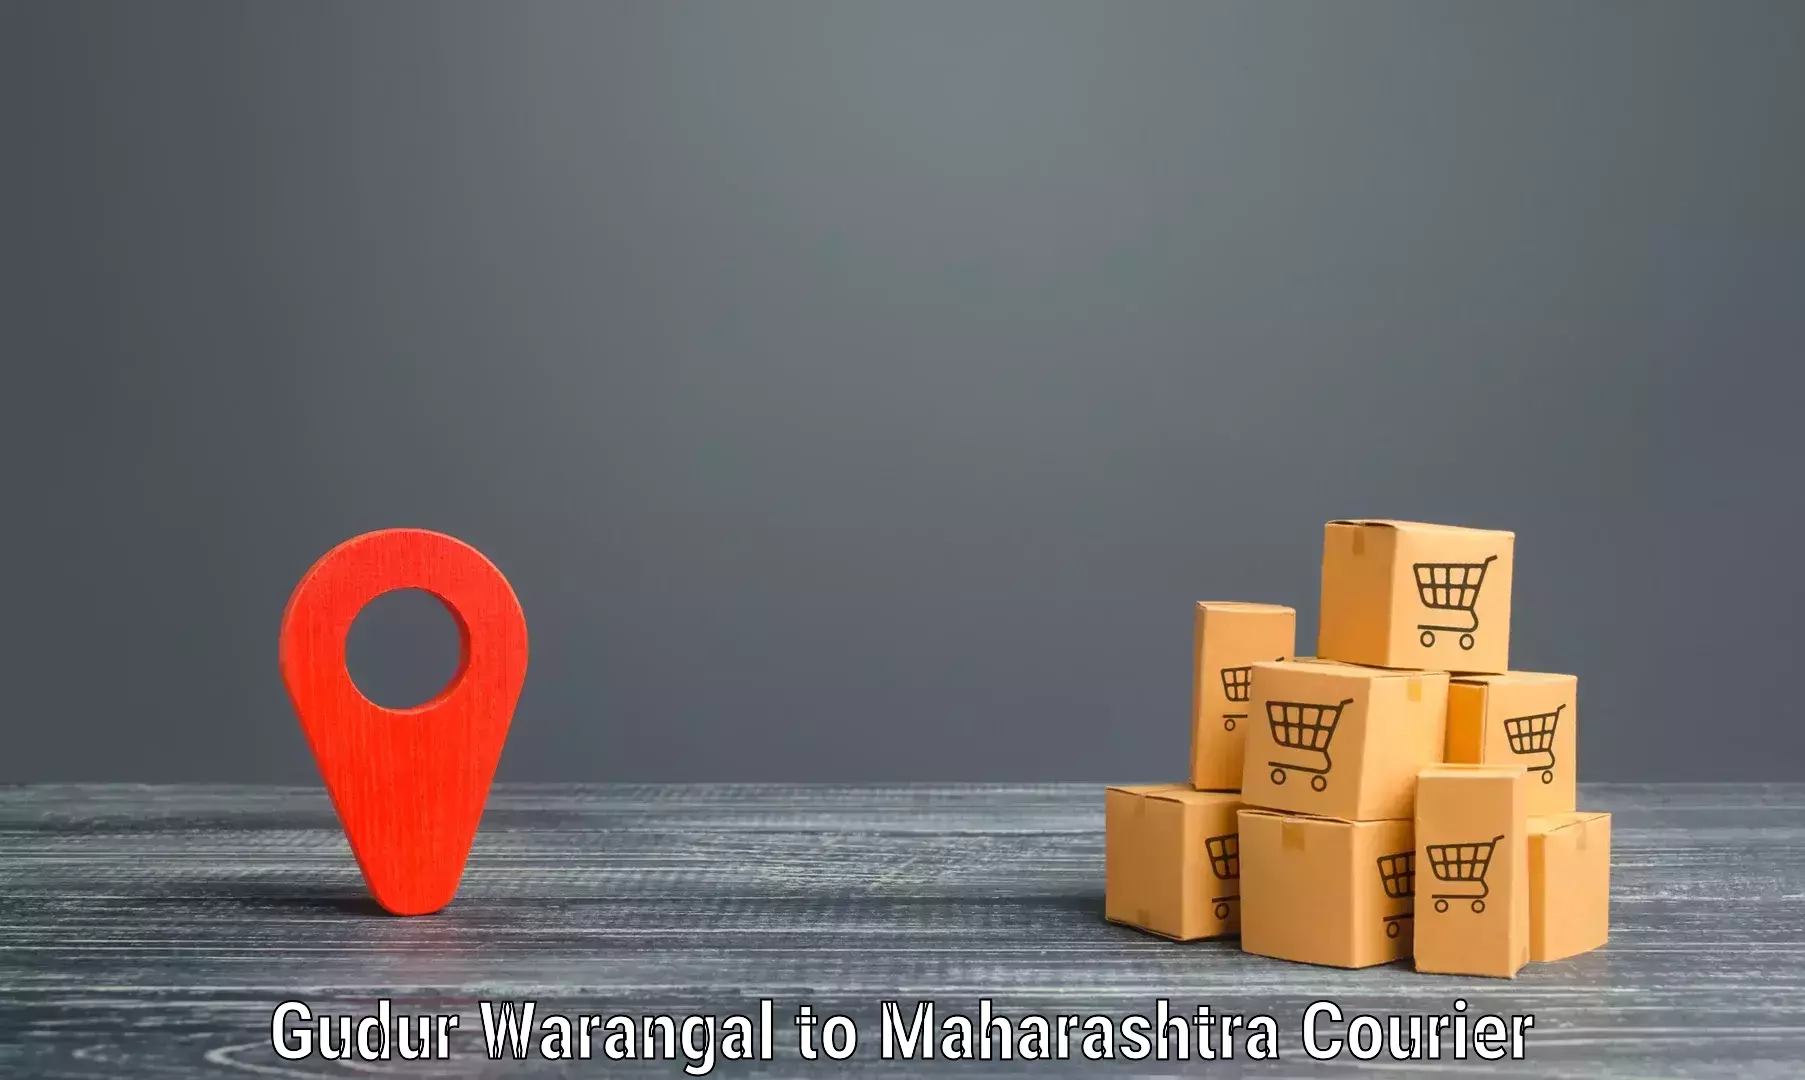 Express delivery capabilities Gudur Warangal to Koregaon